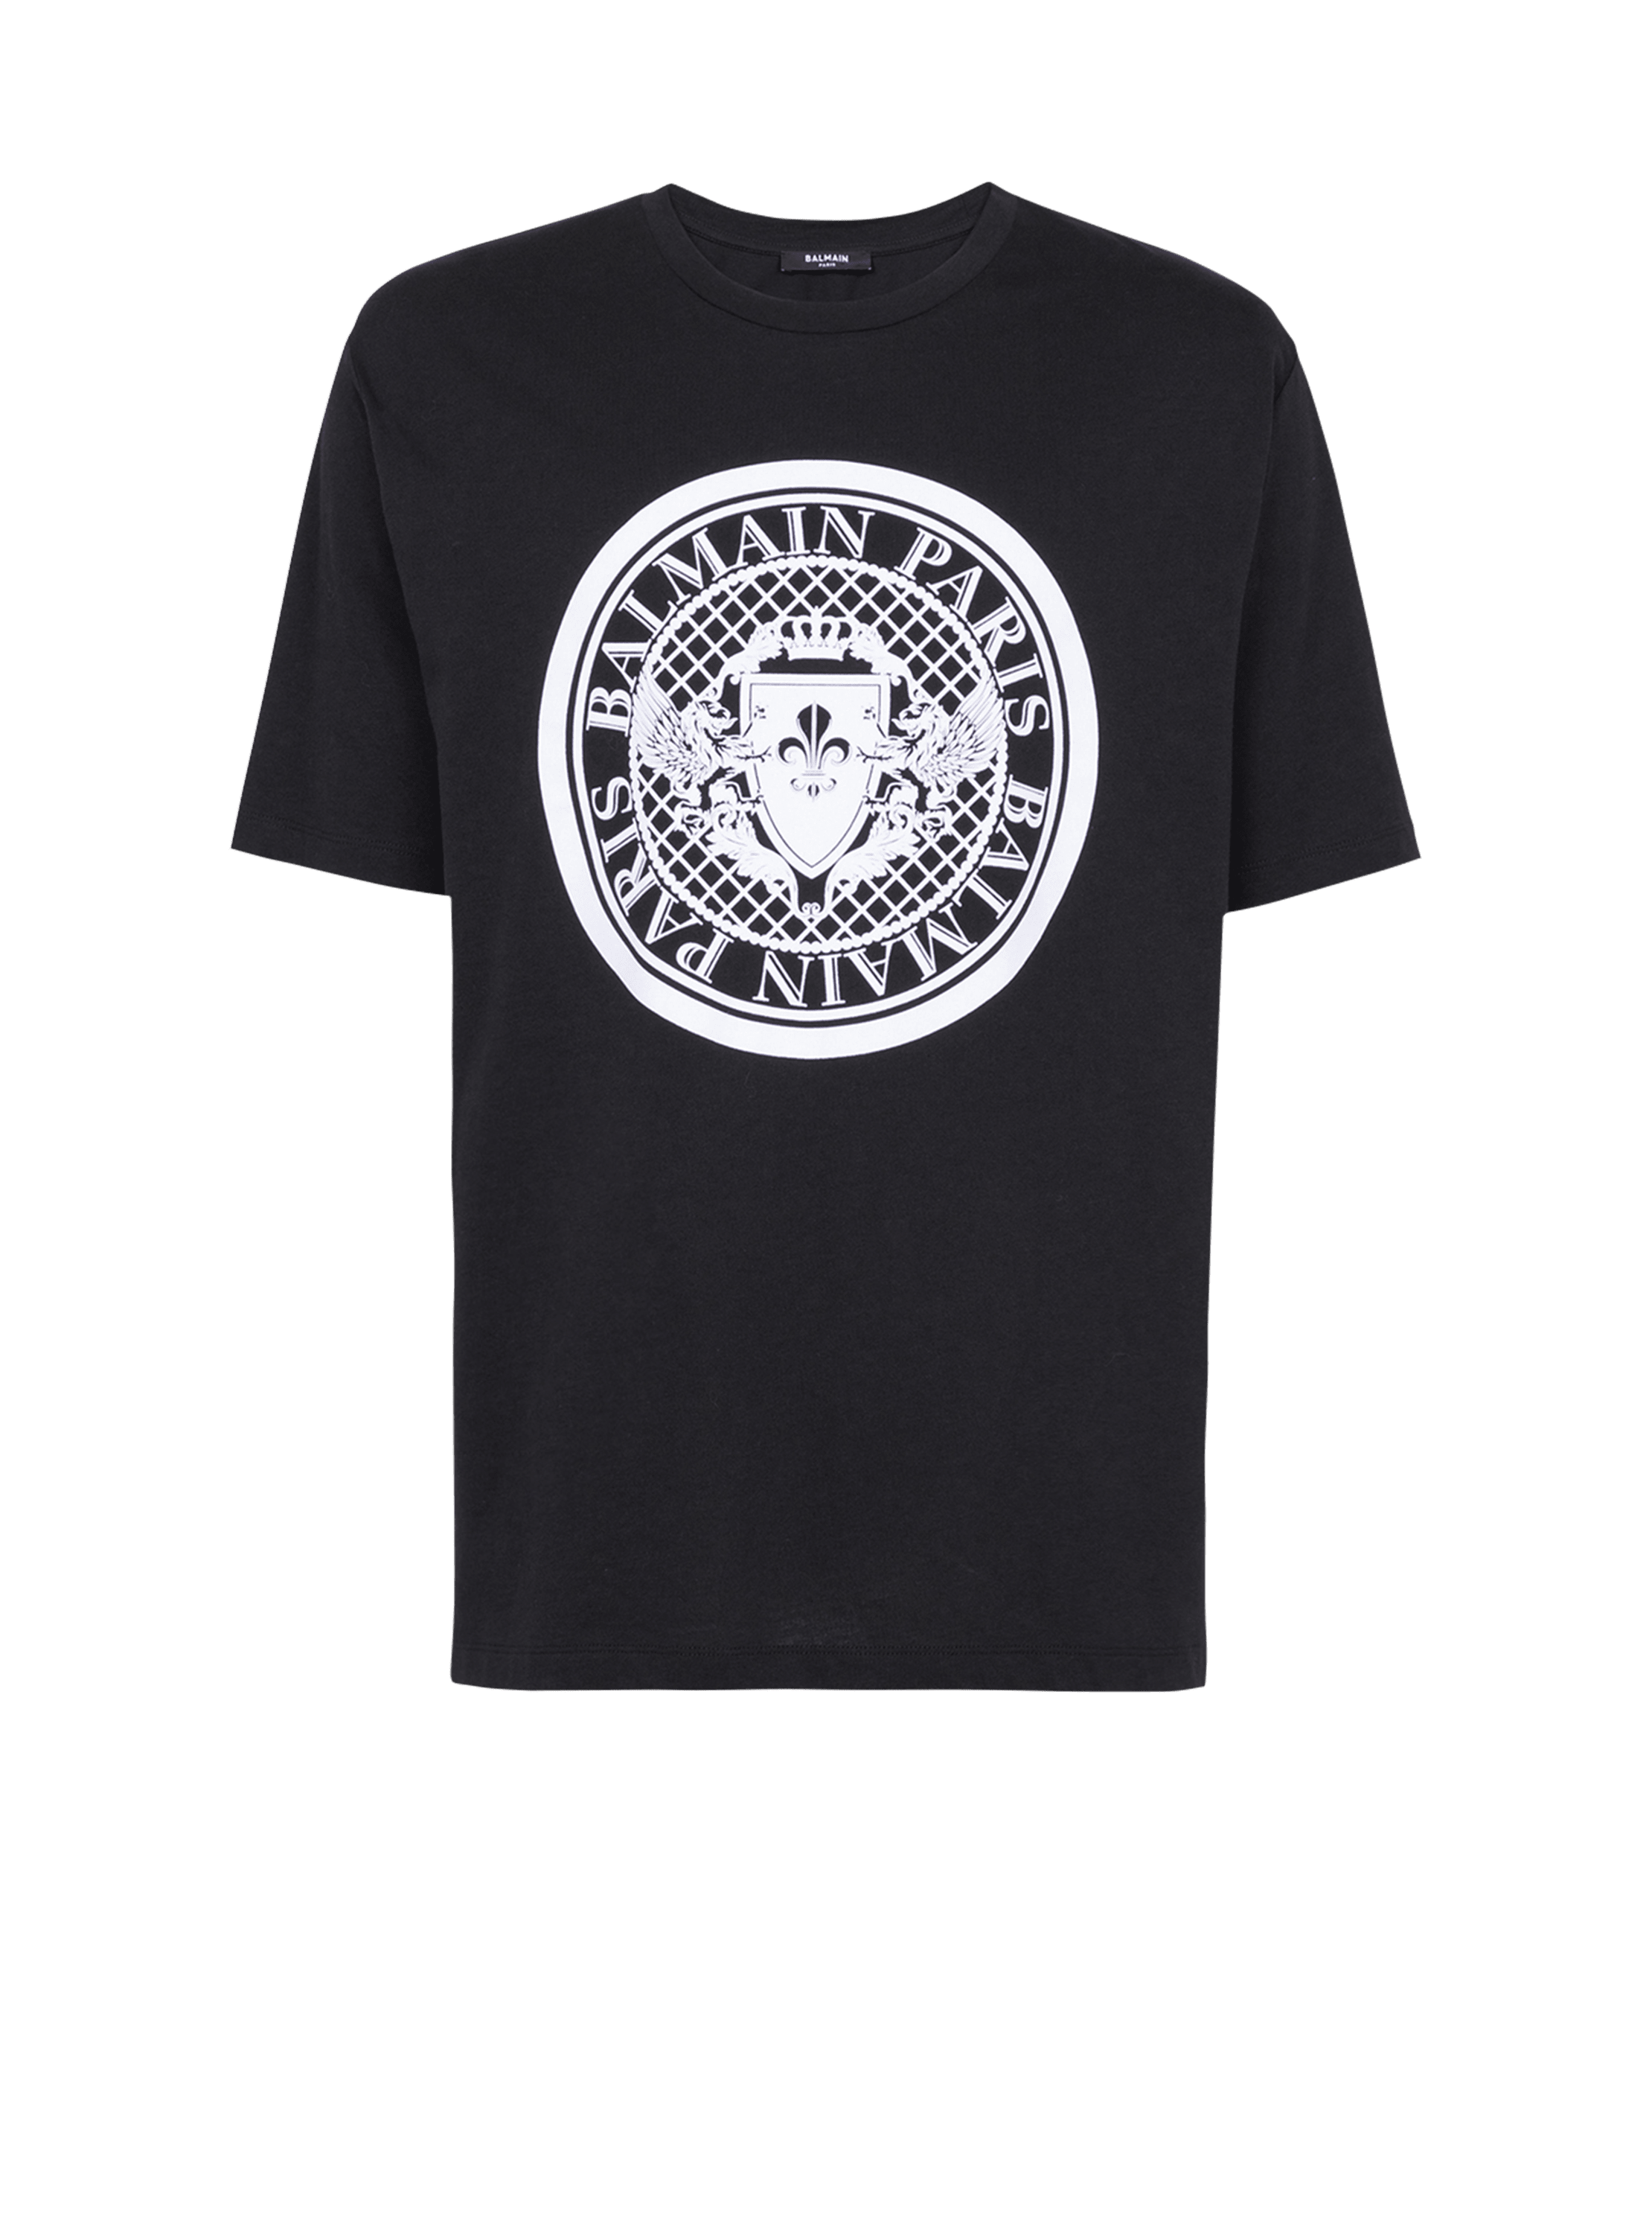 T-shirt Balmain Coin, noir, hi-res